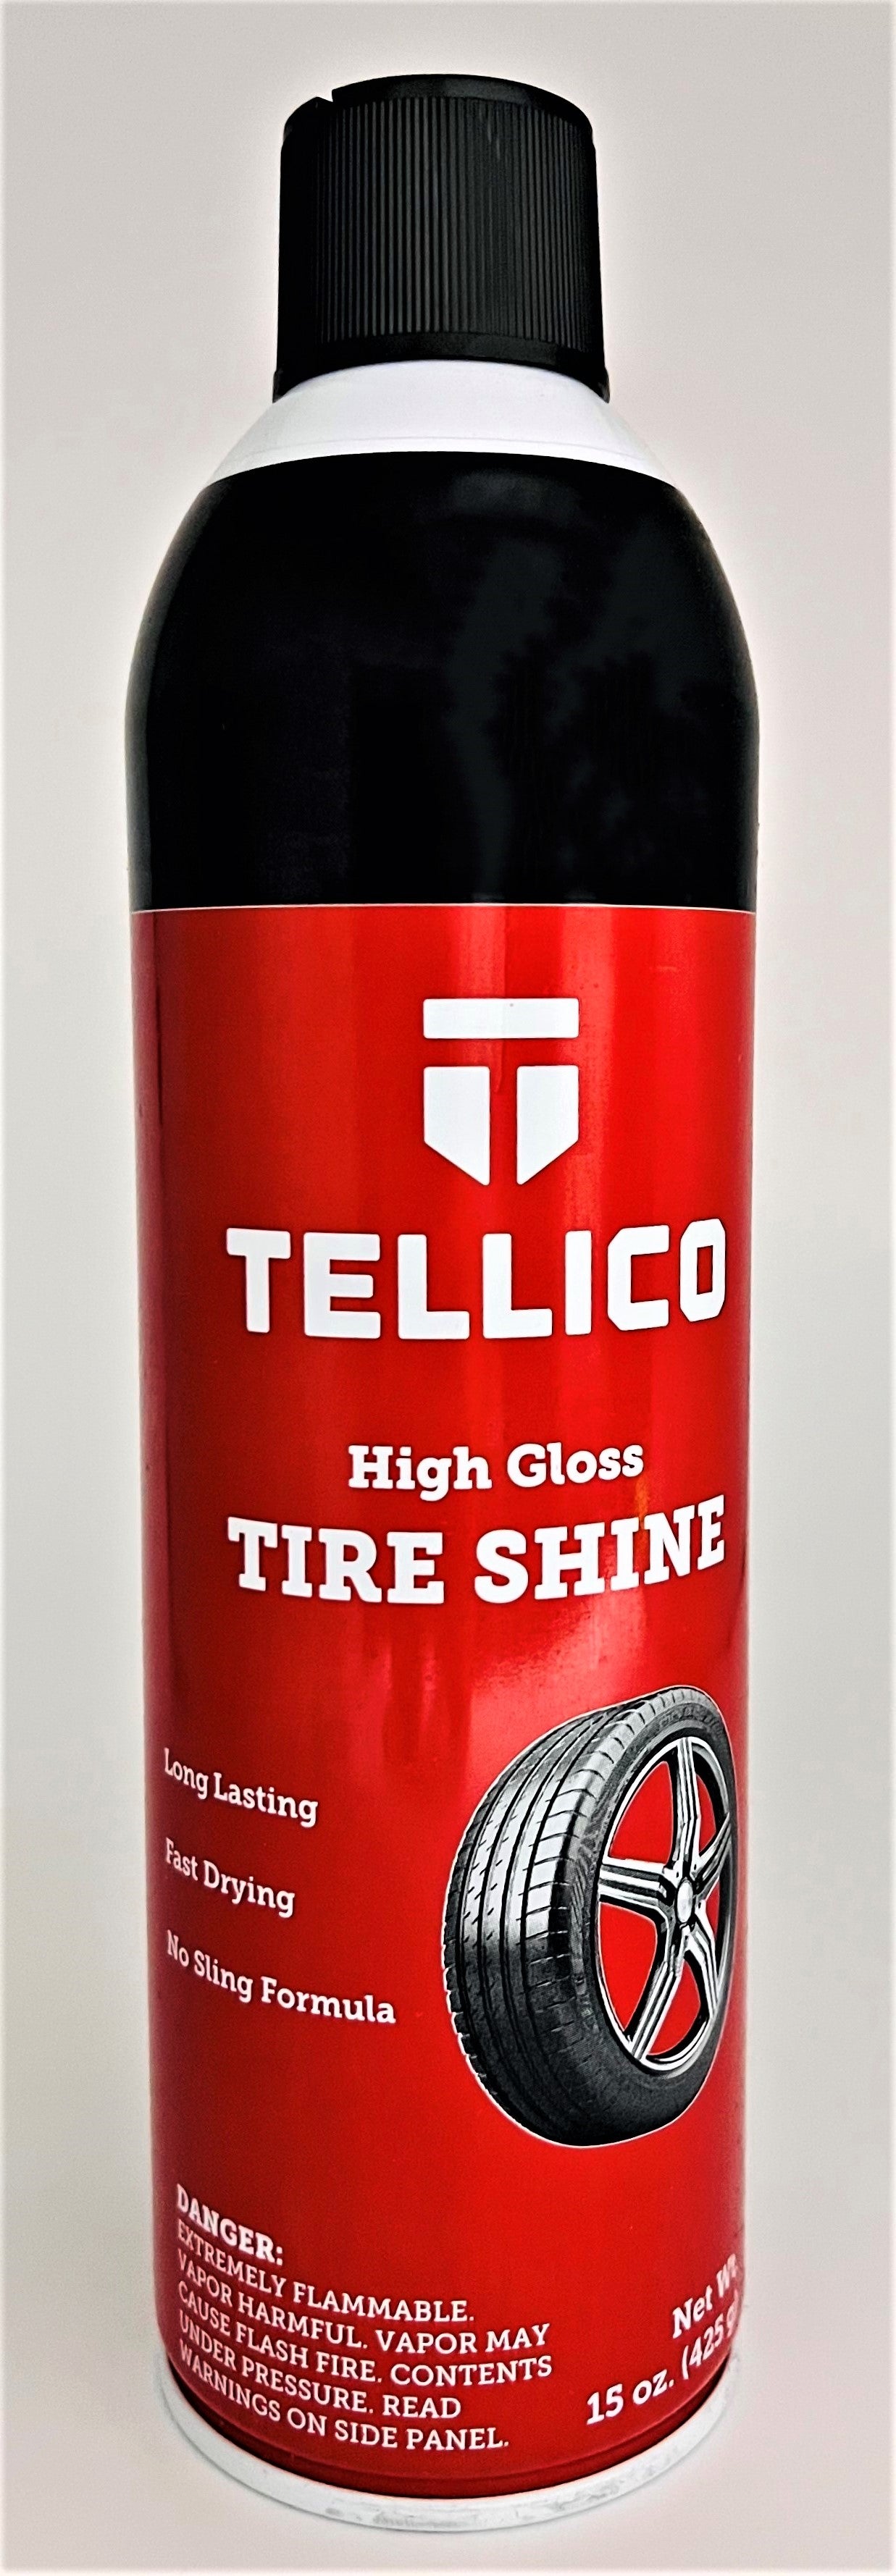 High Gloss Tire Shine